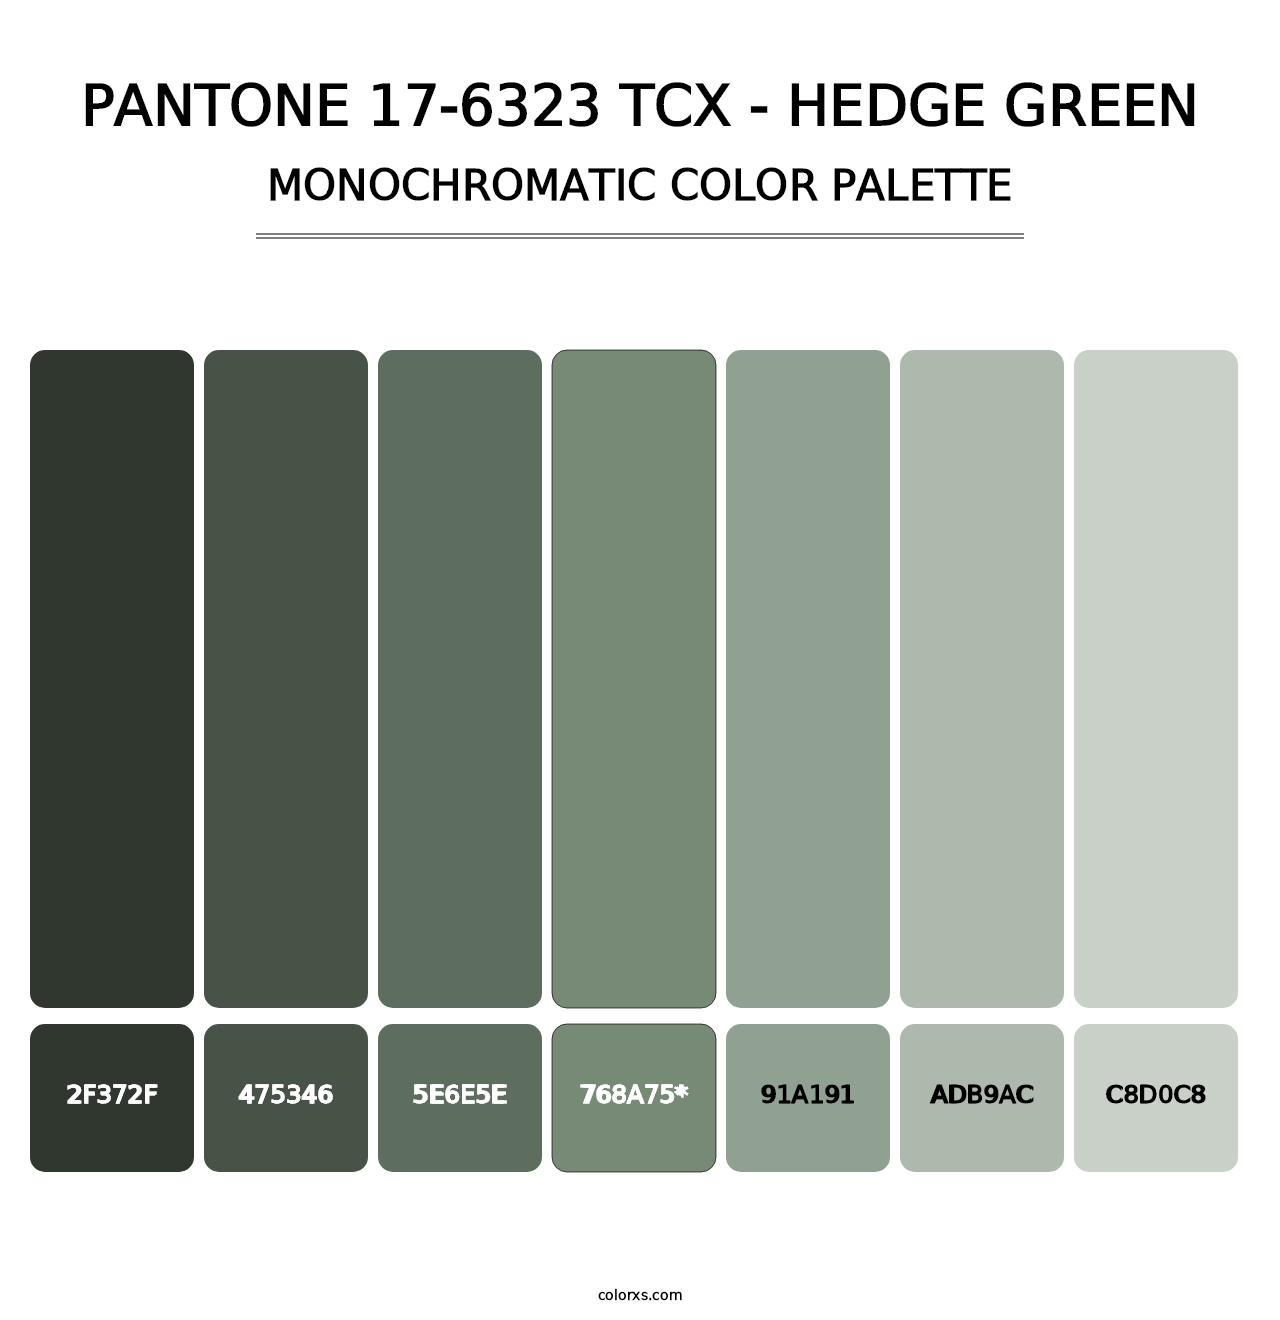 PANTONE 17-6323 TCX - Hedge Green - Monochromatic Color Palette